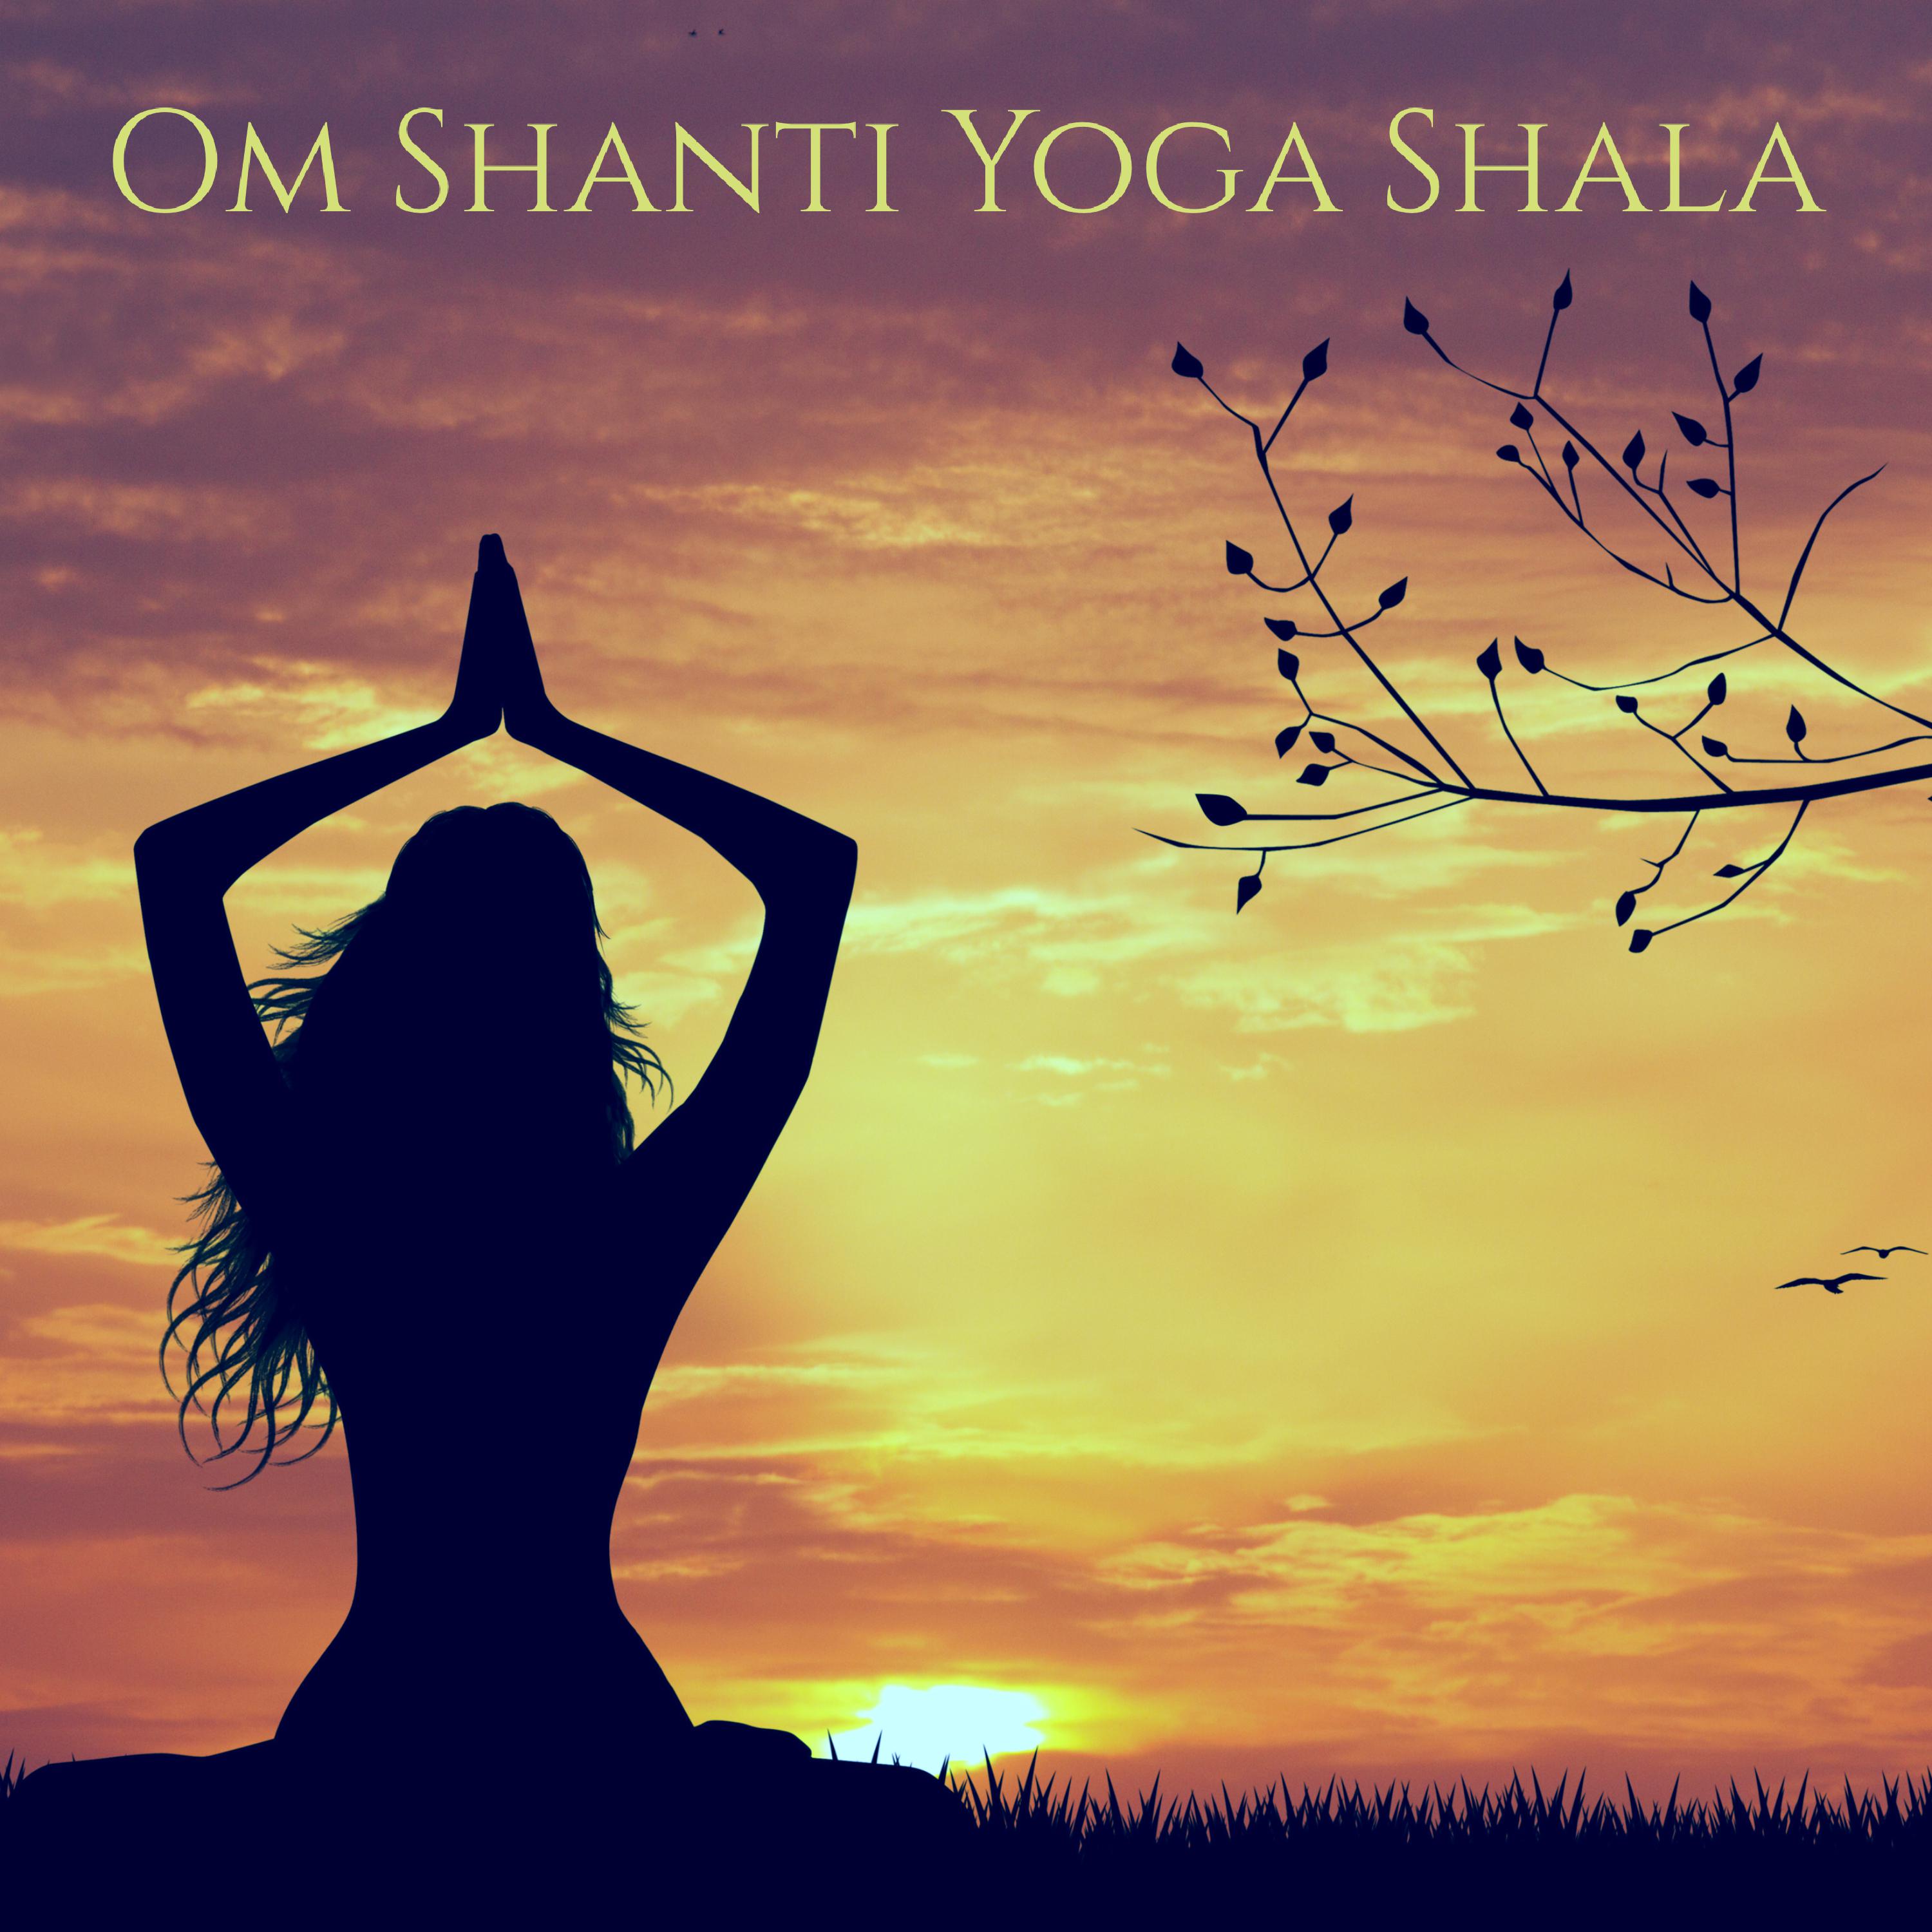 Om Shanti Yoga Shala  Inspiring and Healing, the Perfect Background Music for Vinyasa Yoga Practice